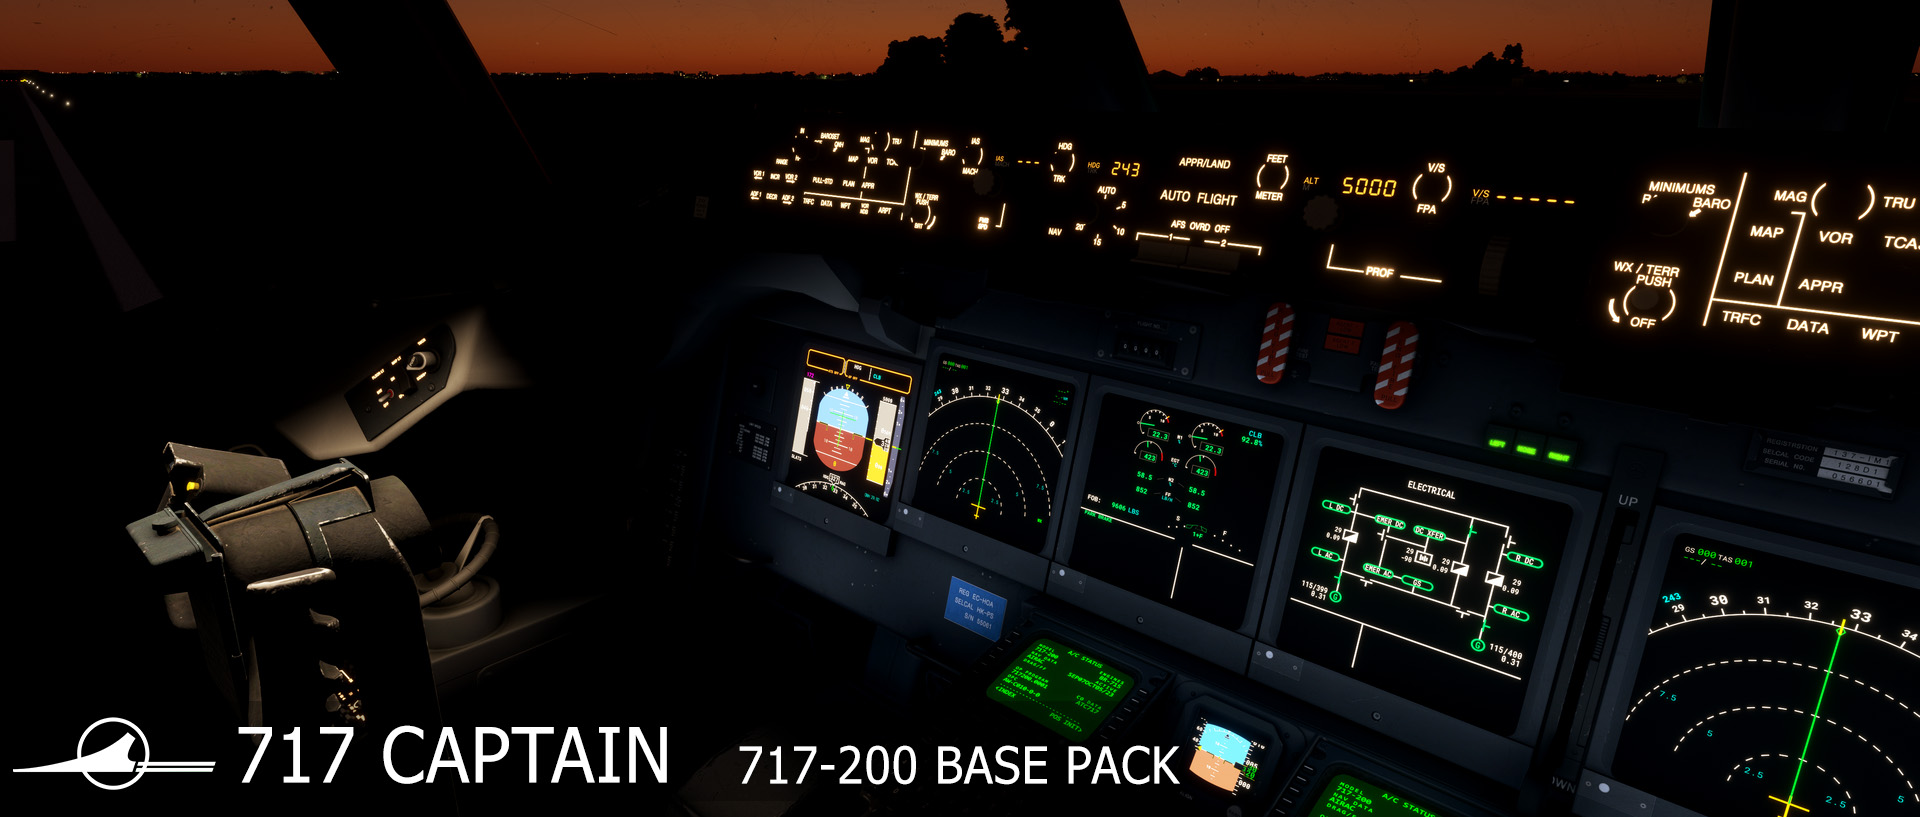 Boeing 717-200 Base Pack, 717 flight deck